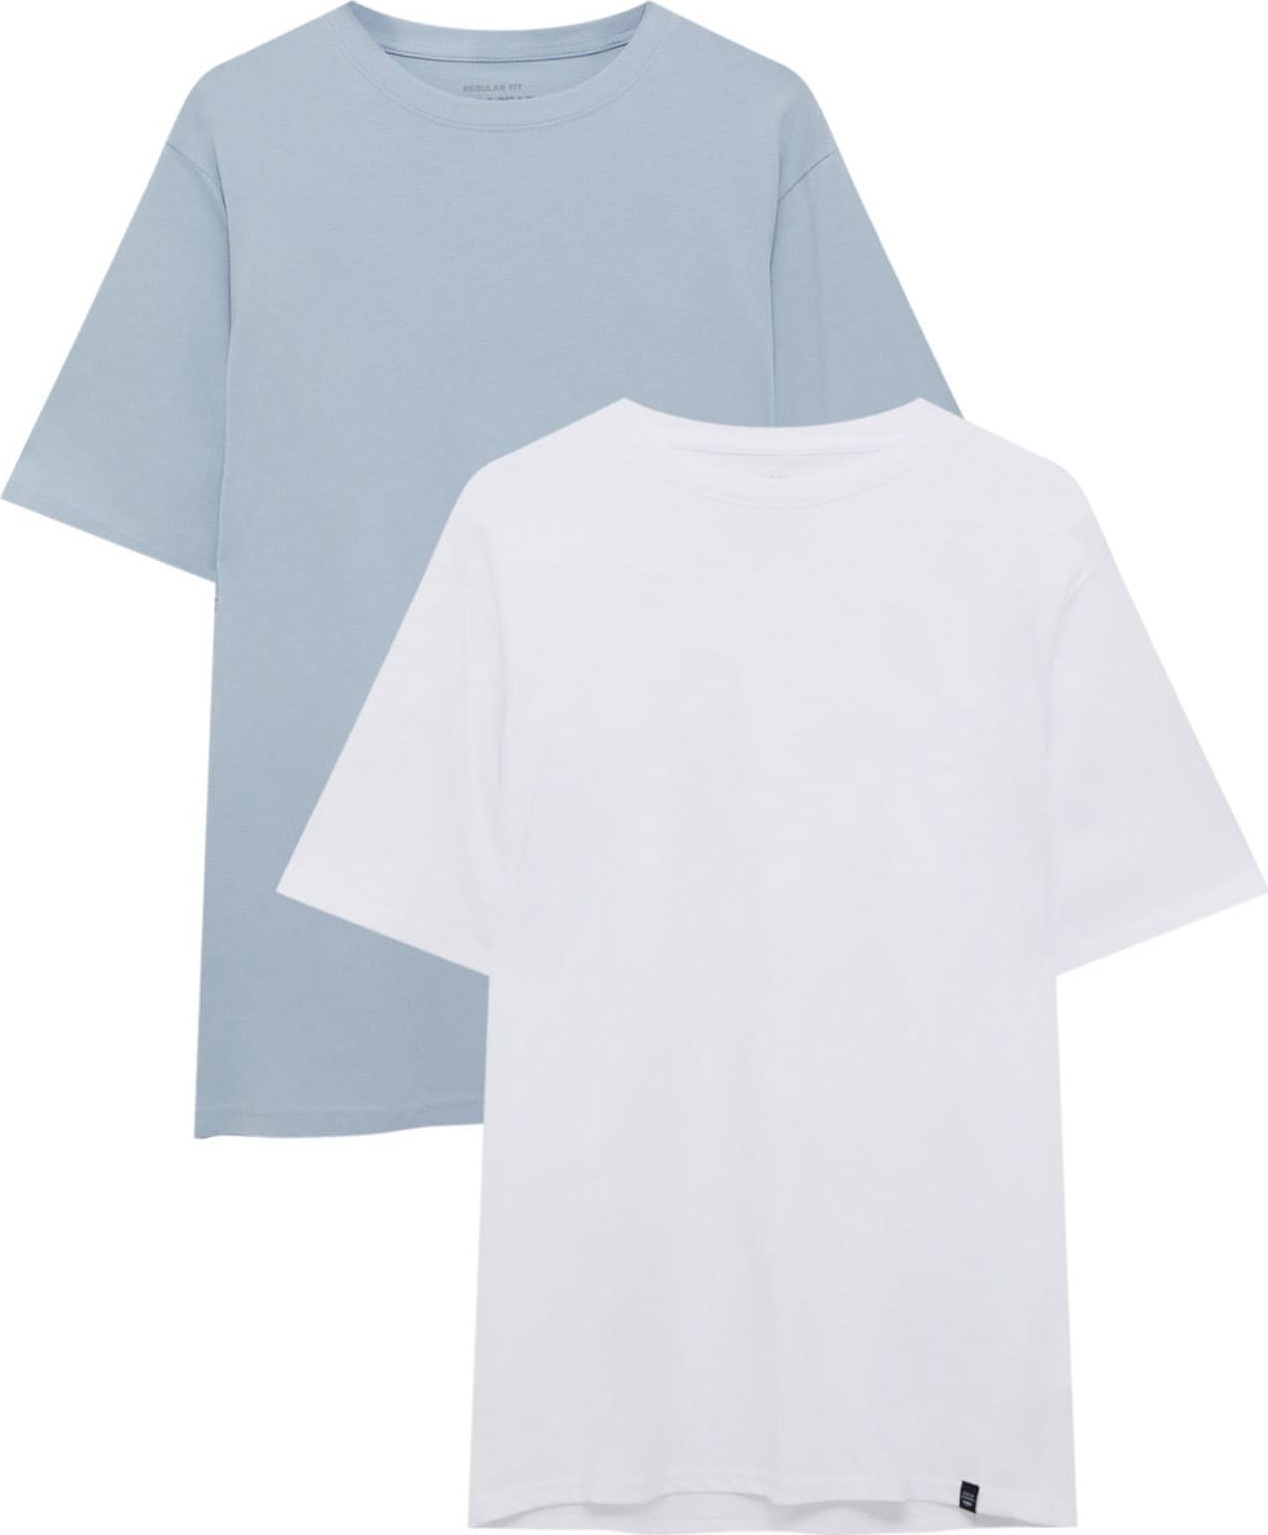 Tričko Pull&Bear chladná modrá / bílá